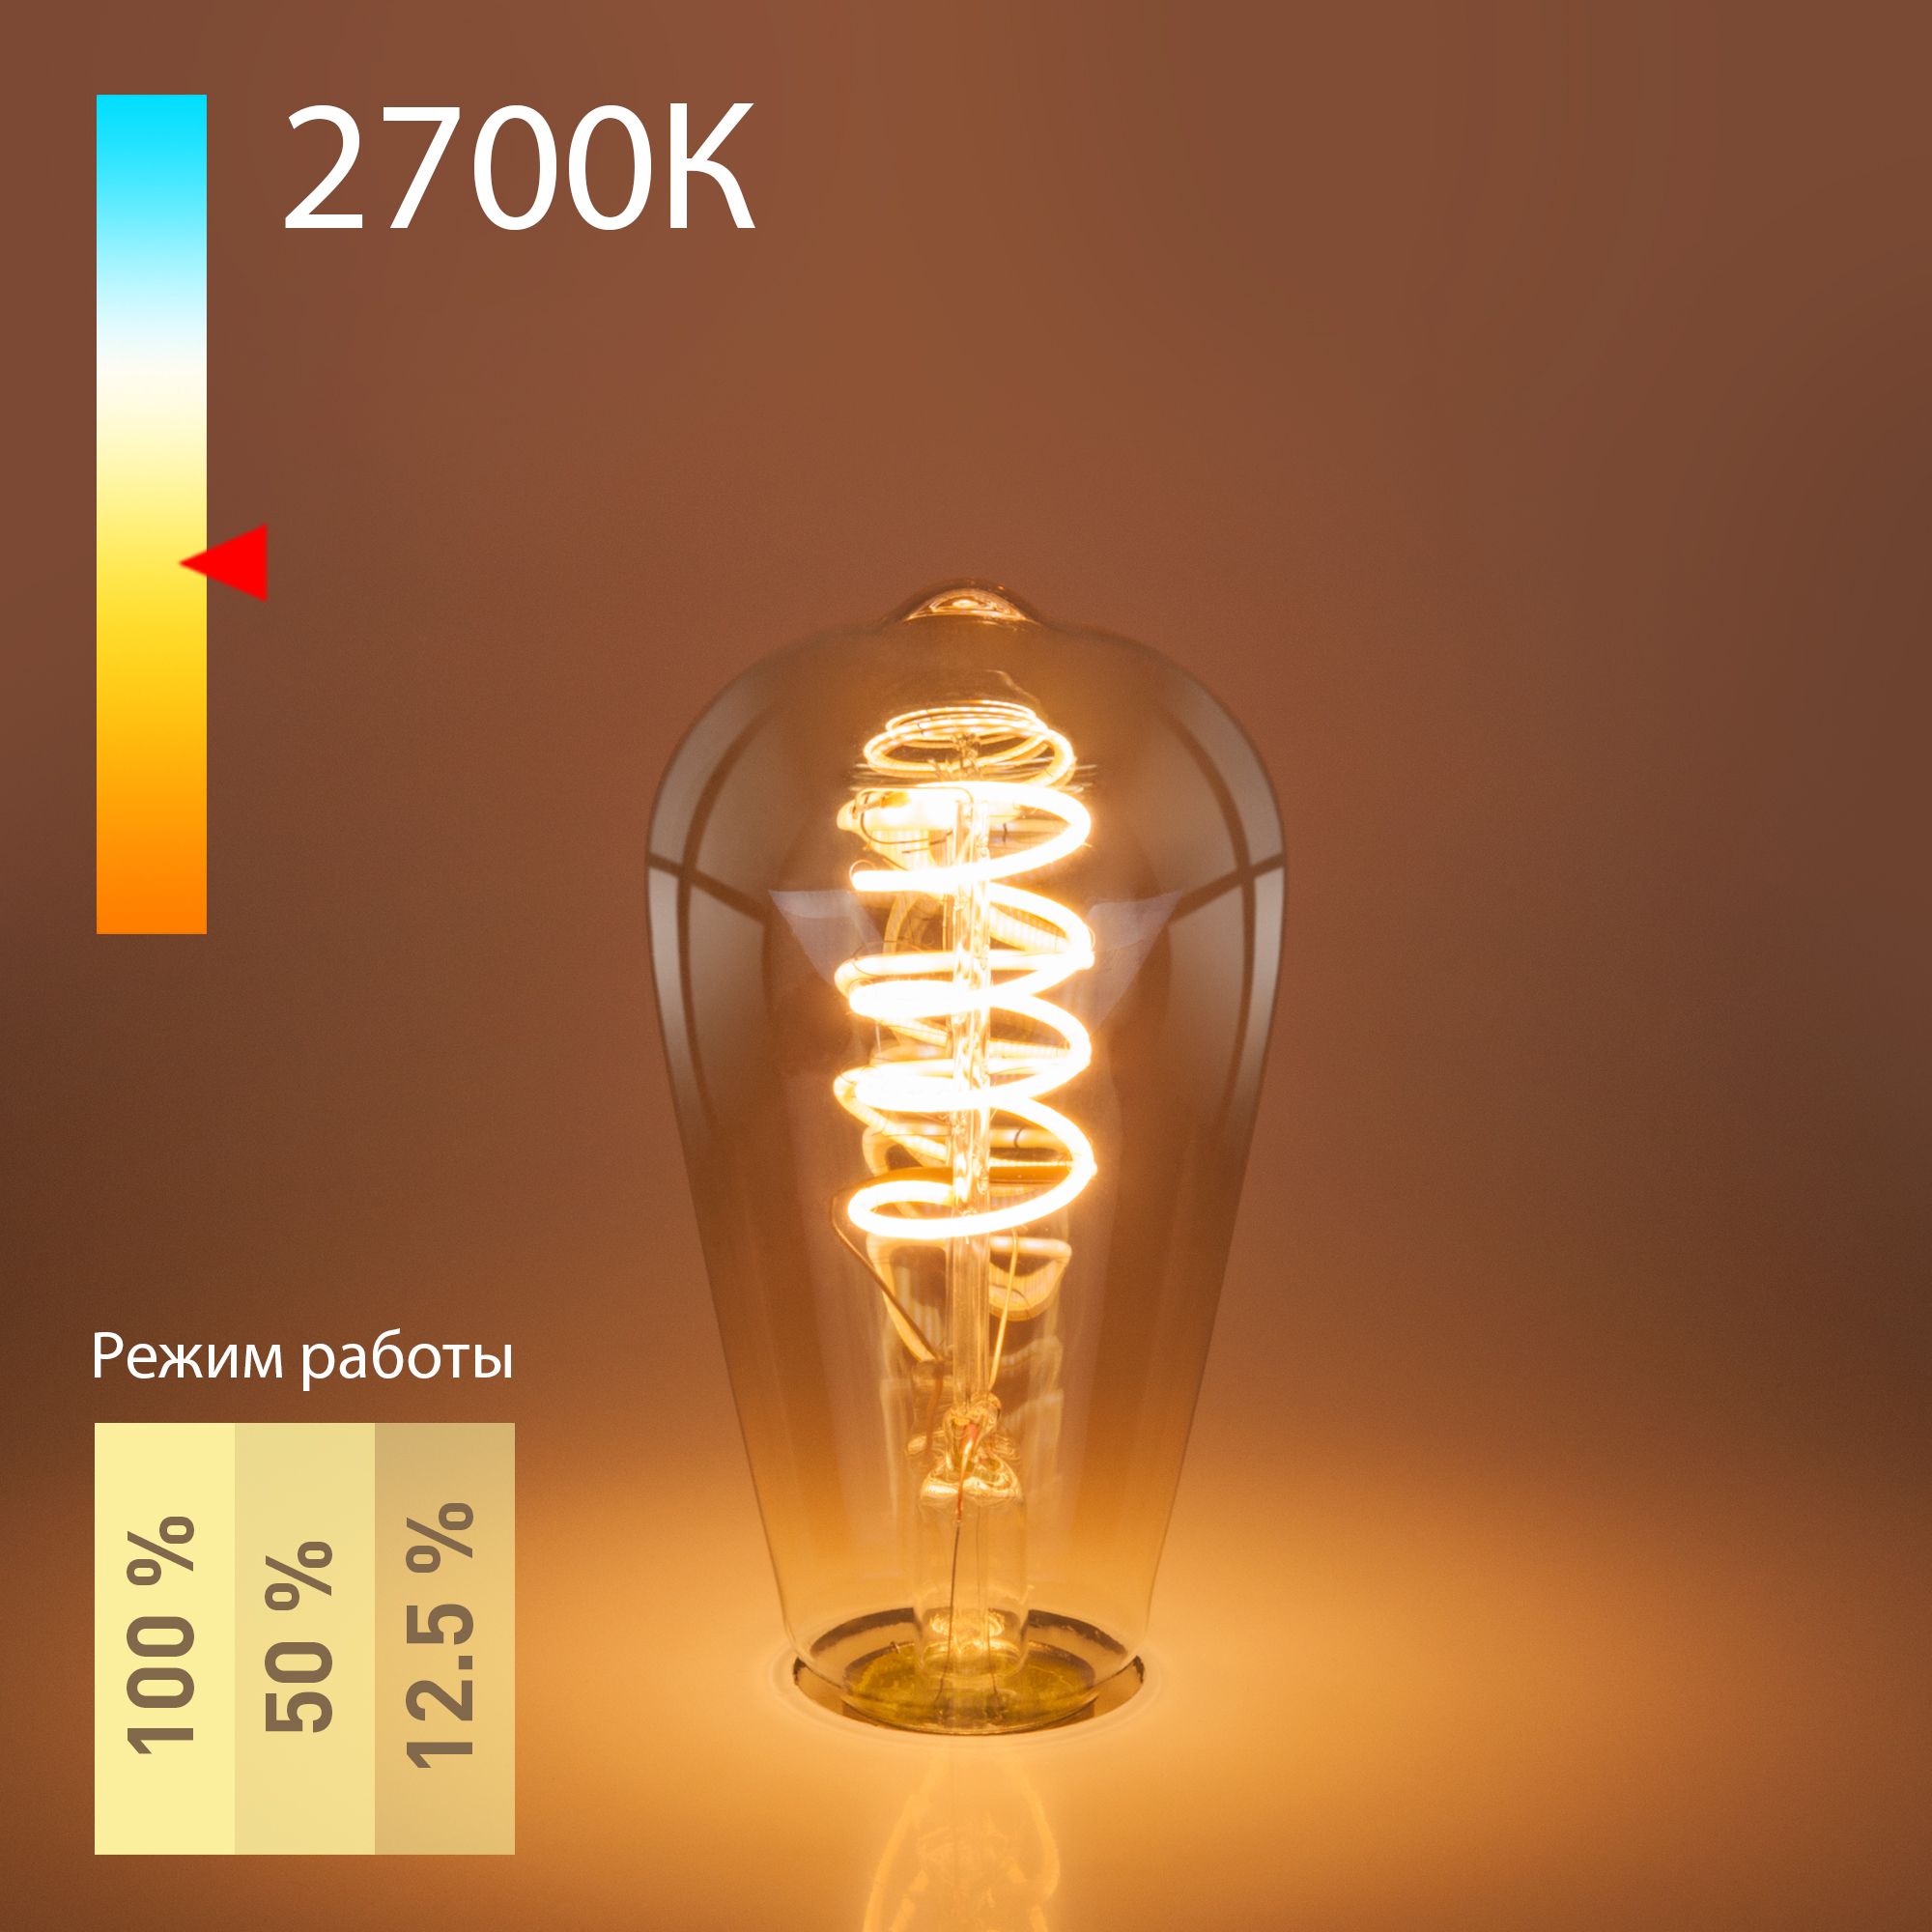 Филаментная светодиодная лампа Dimmable 5W 2700K E27 (ST64 тонированный) BLE2746